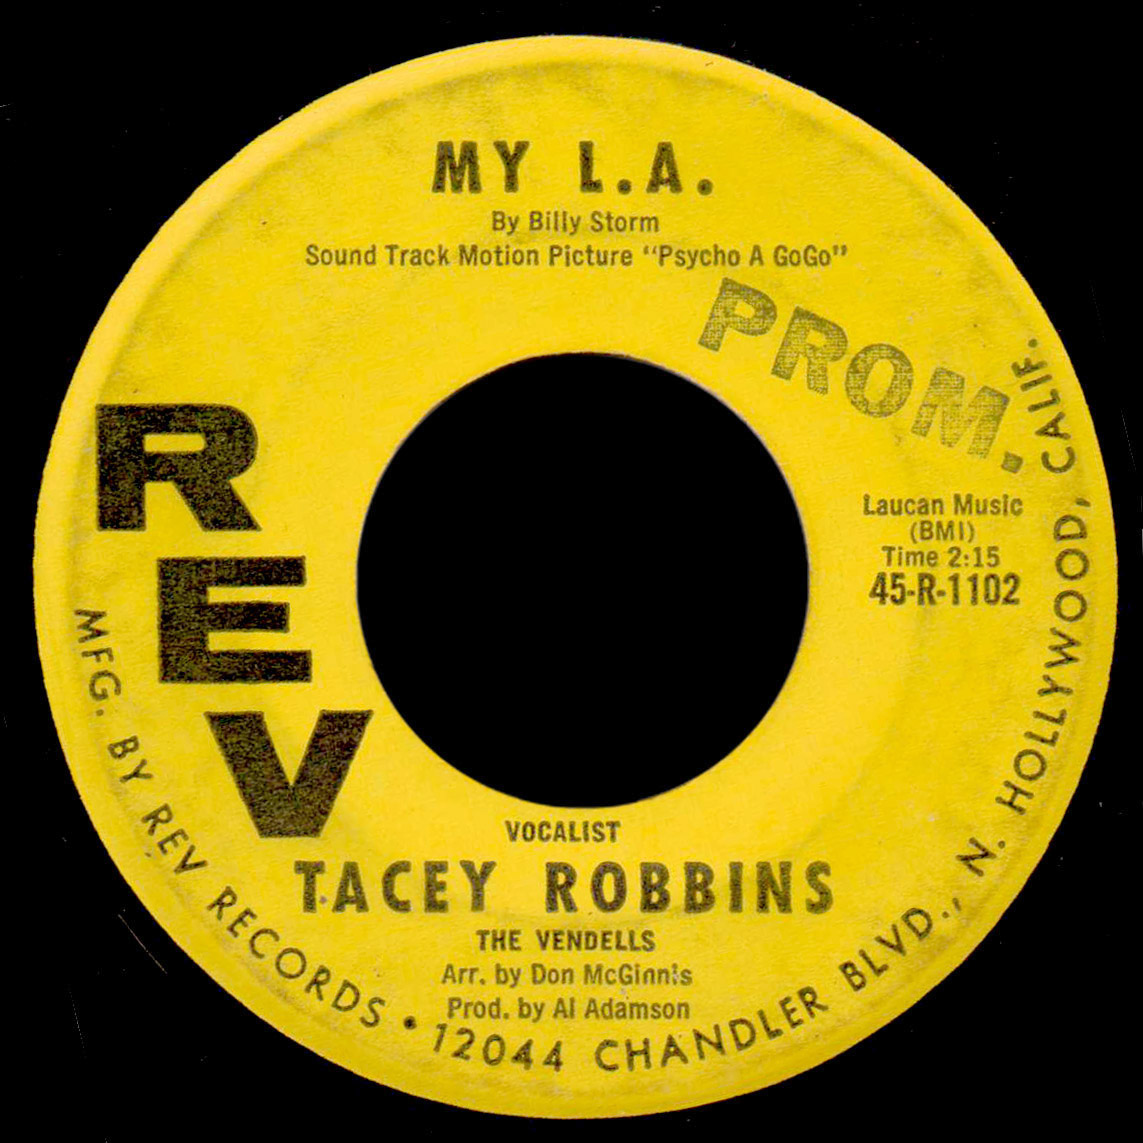 Tacey Robbins & the Vendells, Rev 45-R-1102 "My L.A."